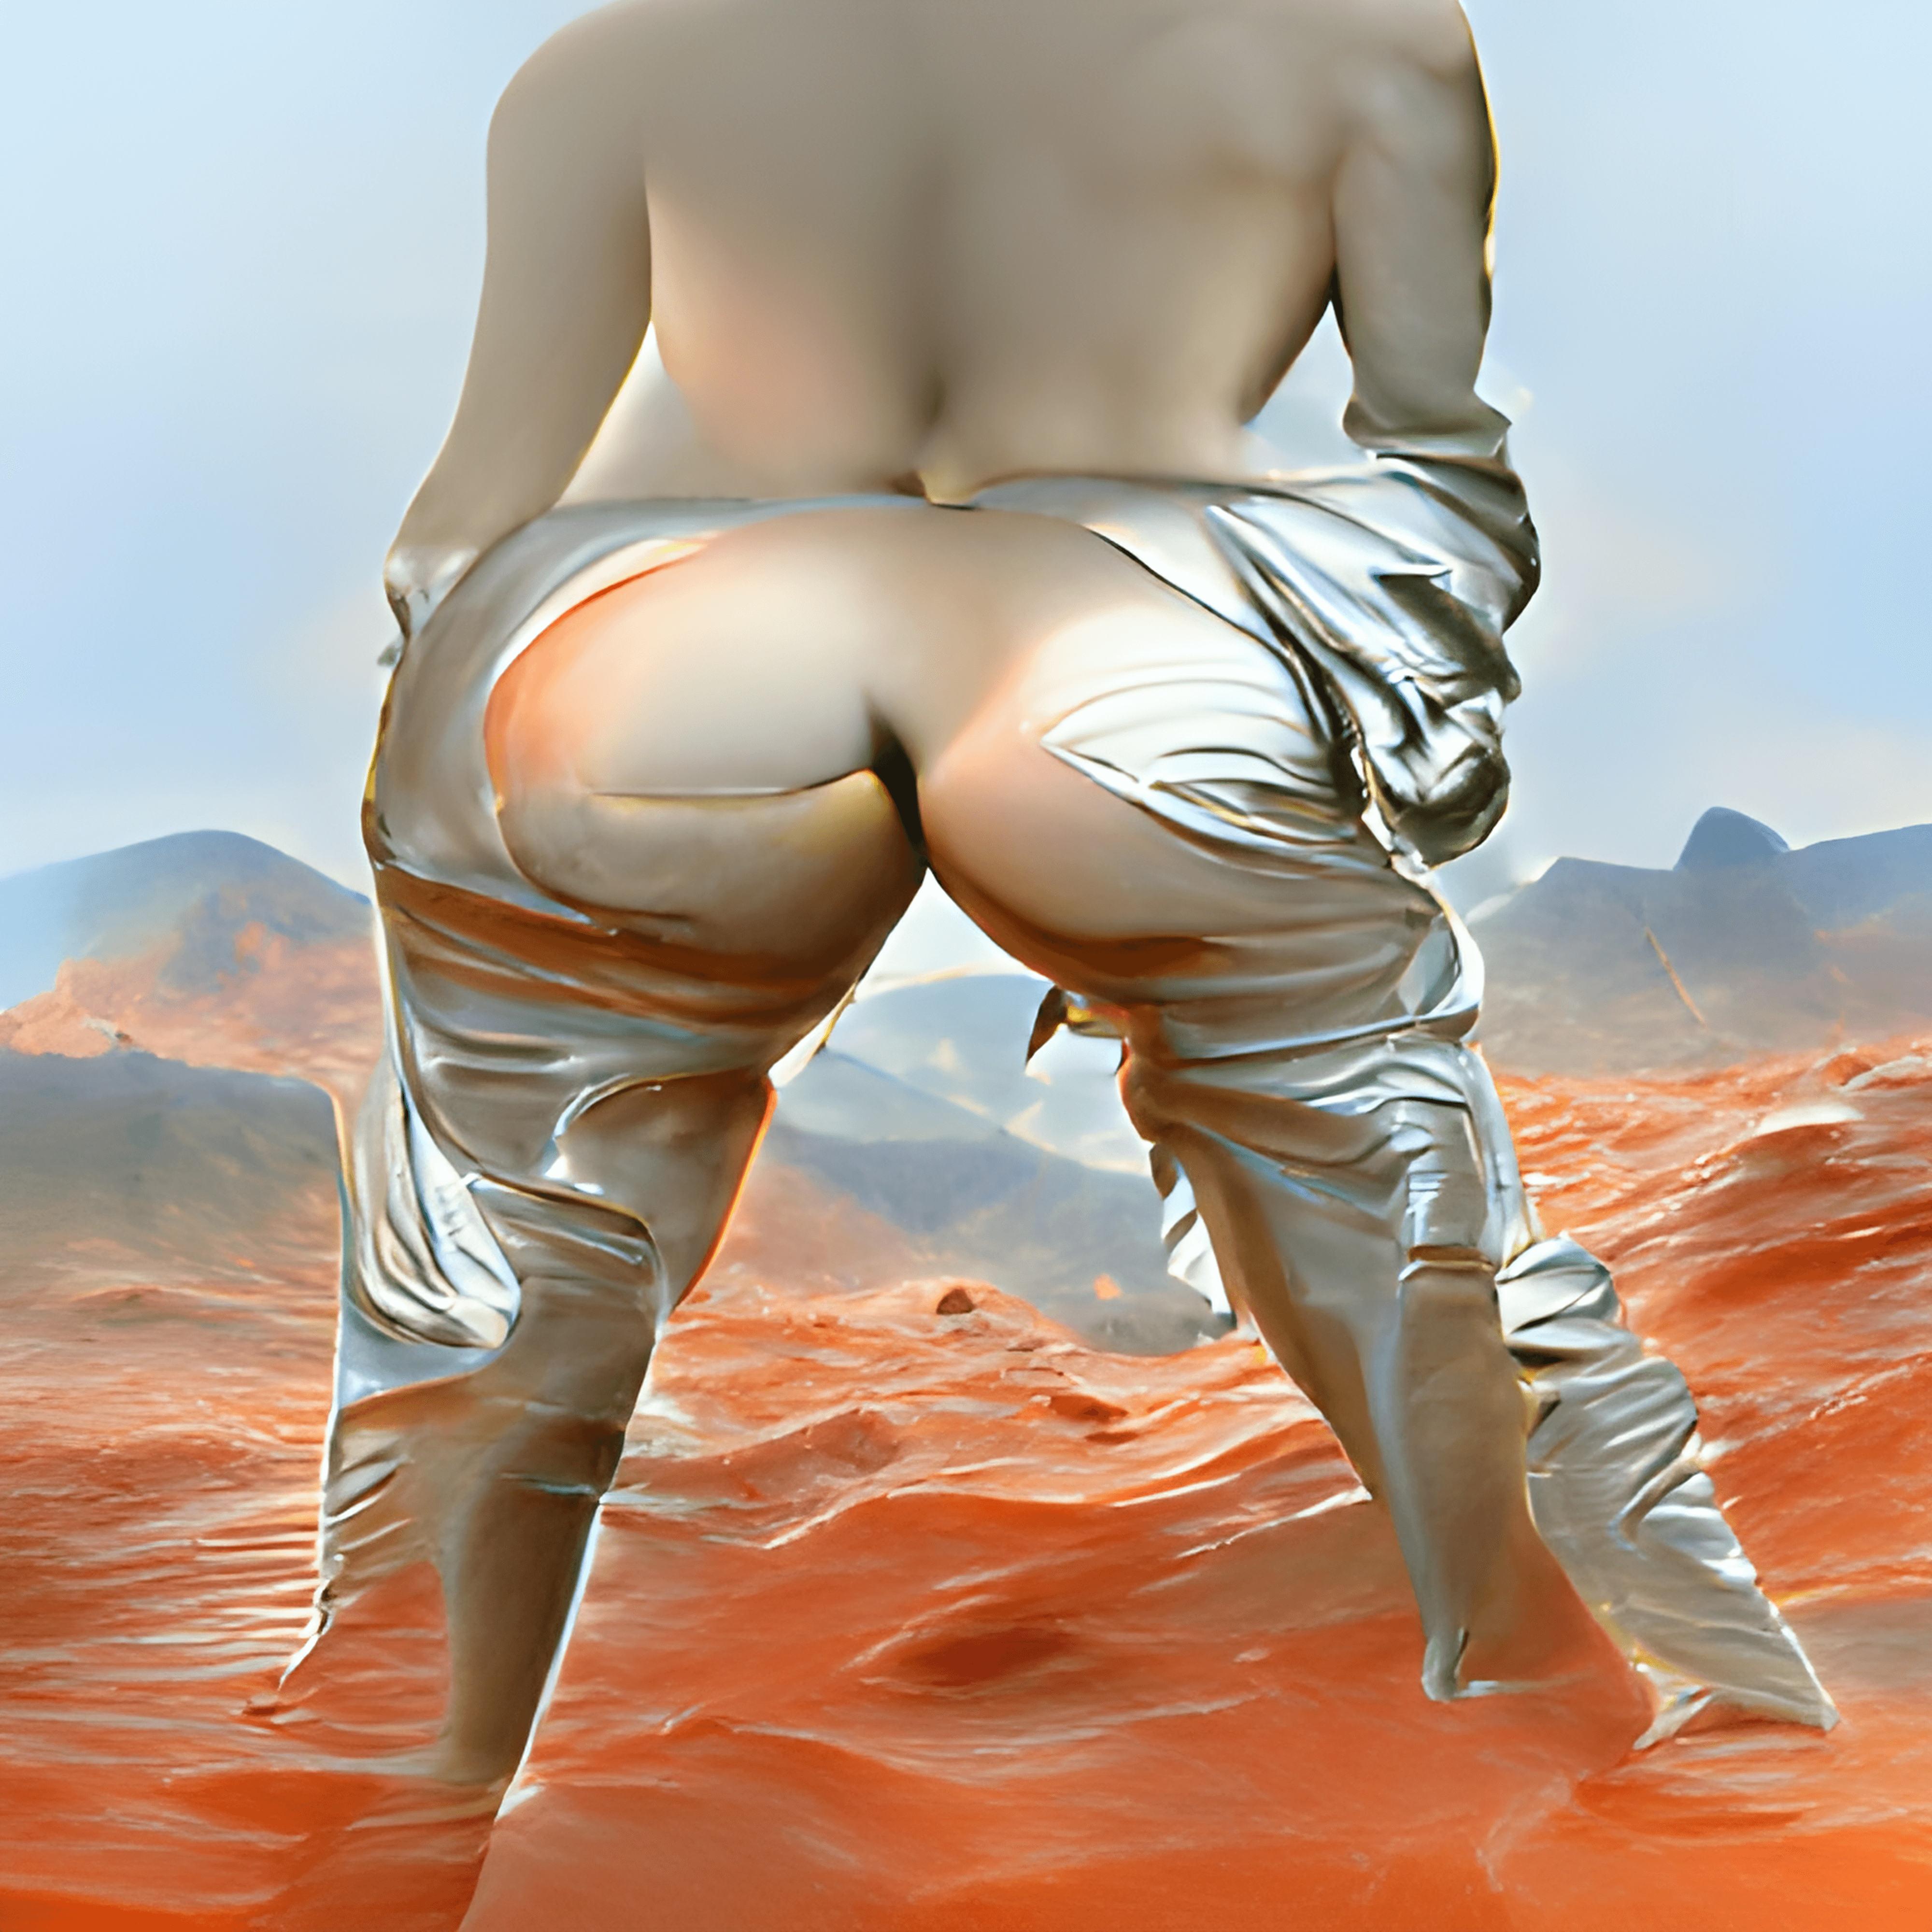 the first ass on mars